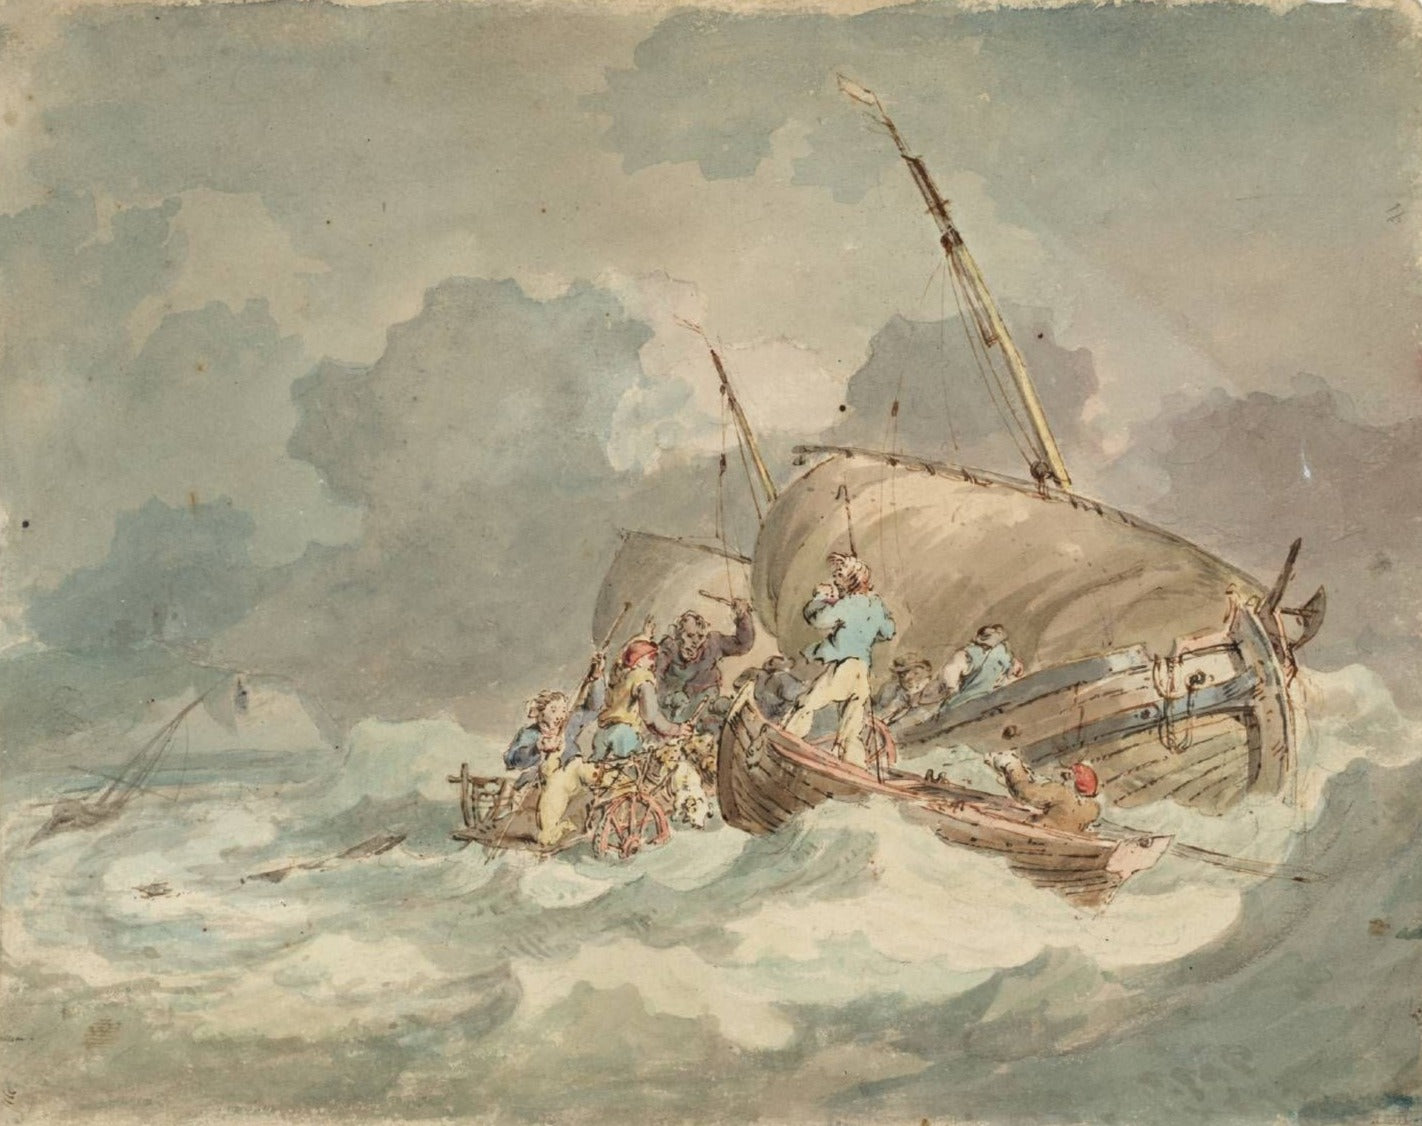 Les marins embarquent des cochons - William Turner